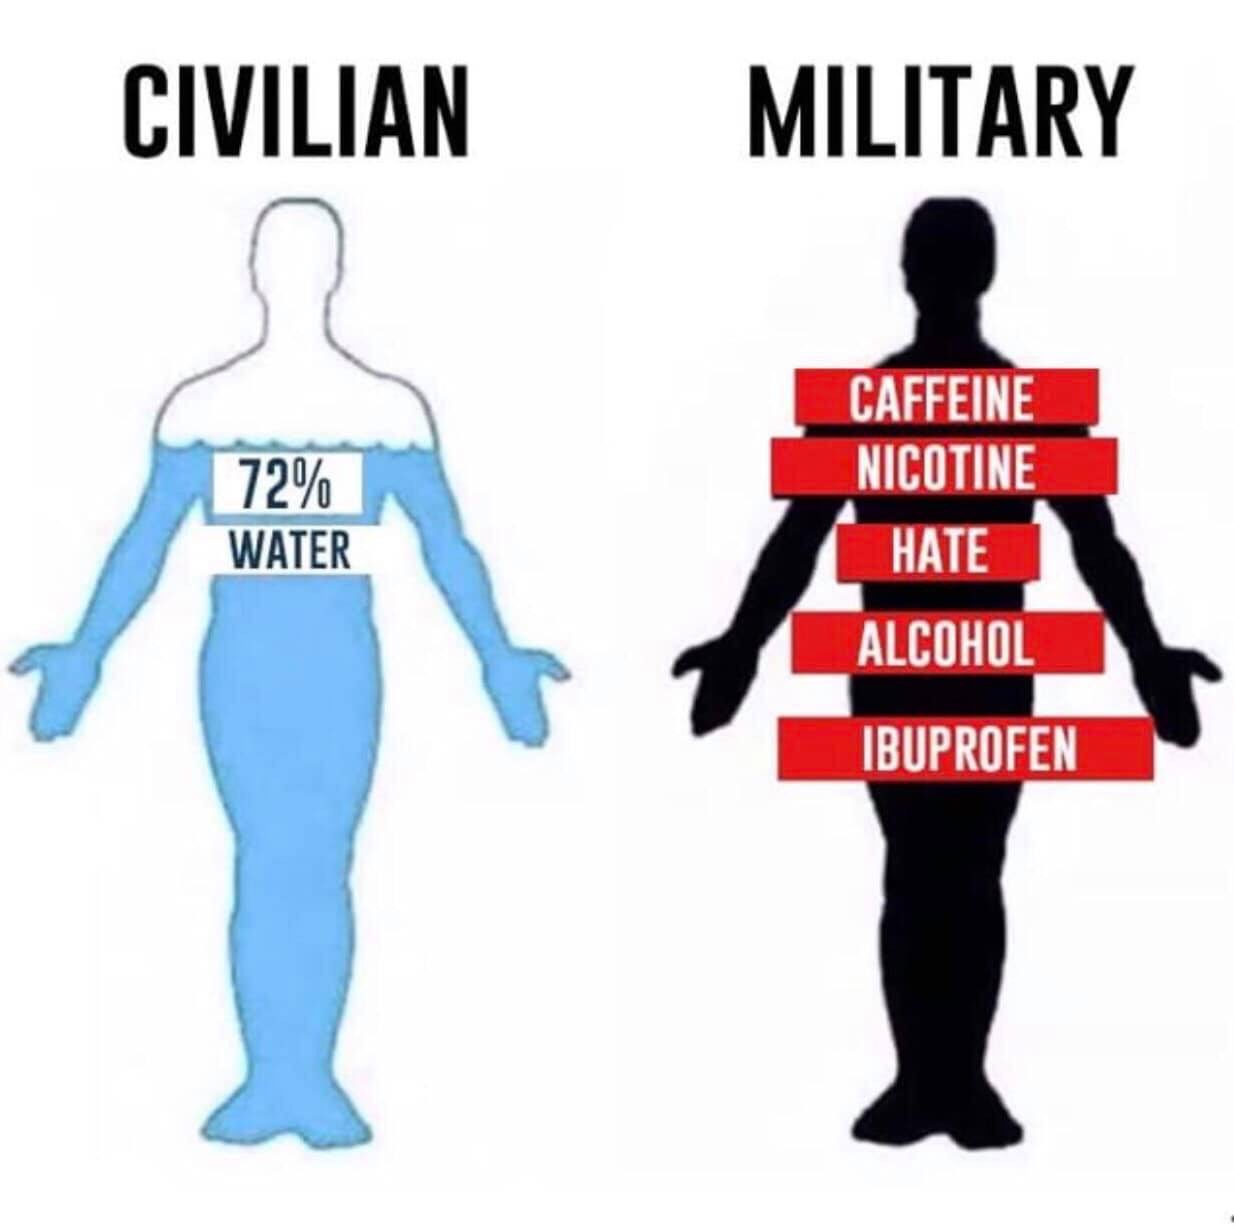 caffeine and hate meme - Civilian Military 72% Water Caffeine Nicotine Hate Alcohol Ibuprofen